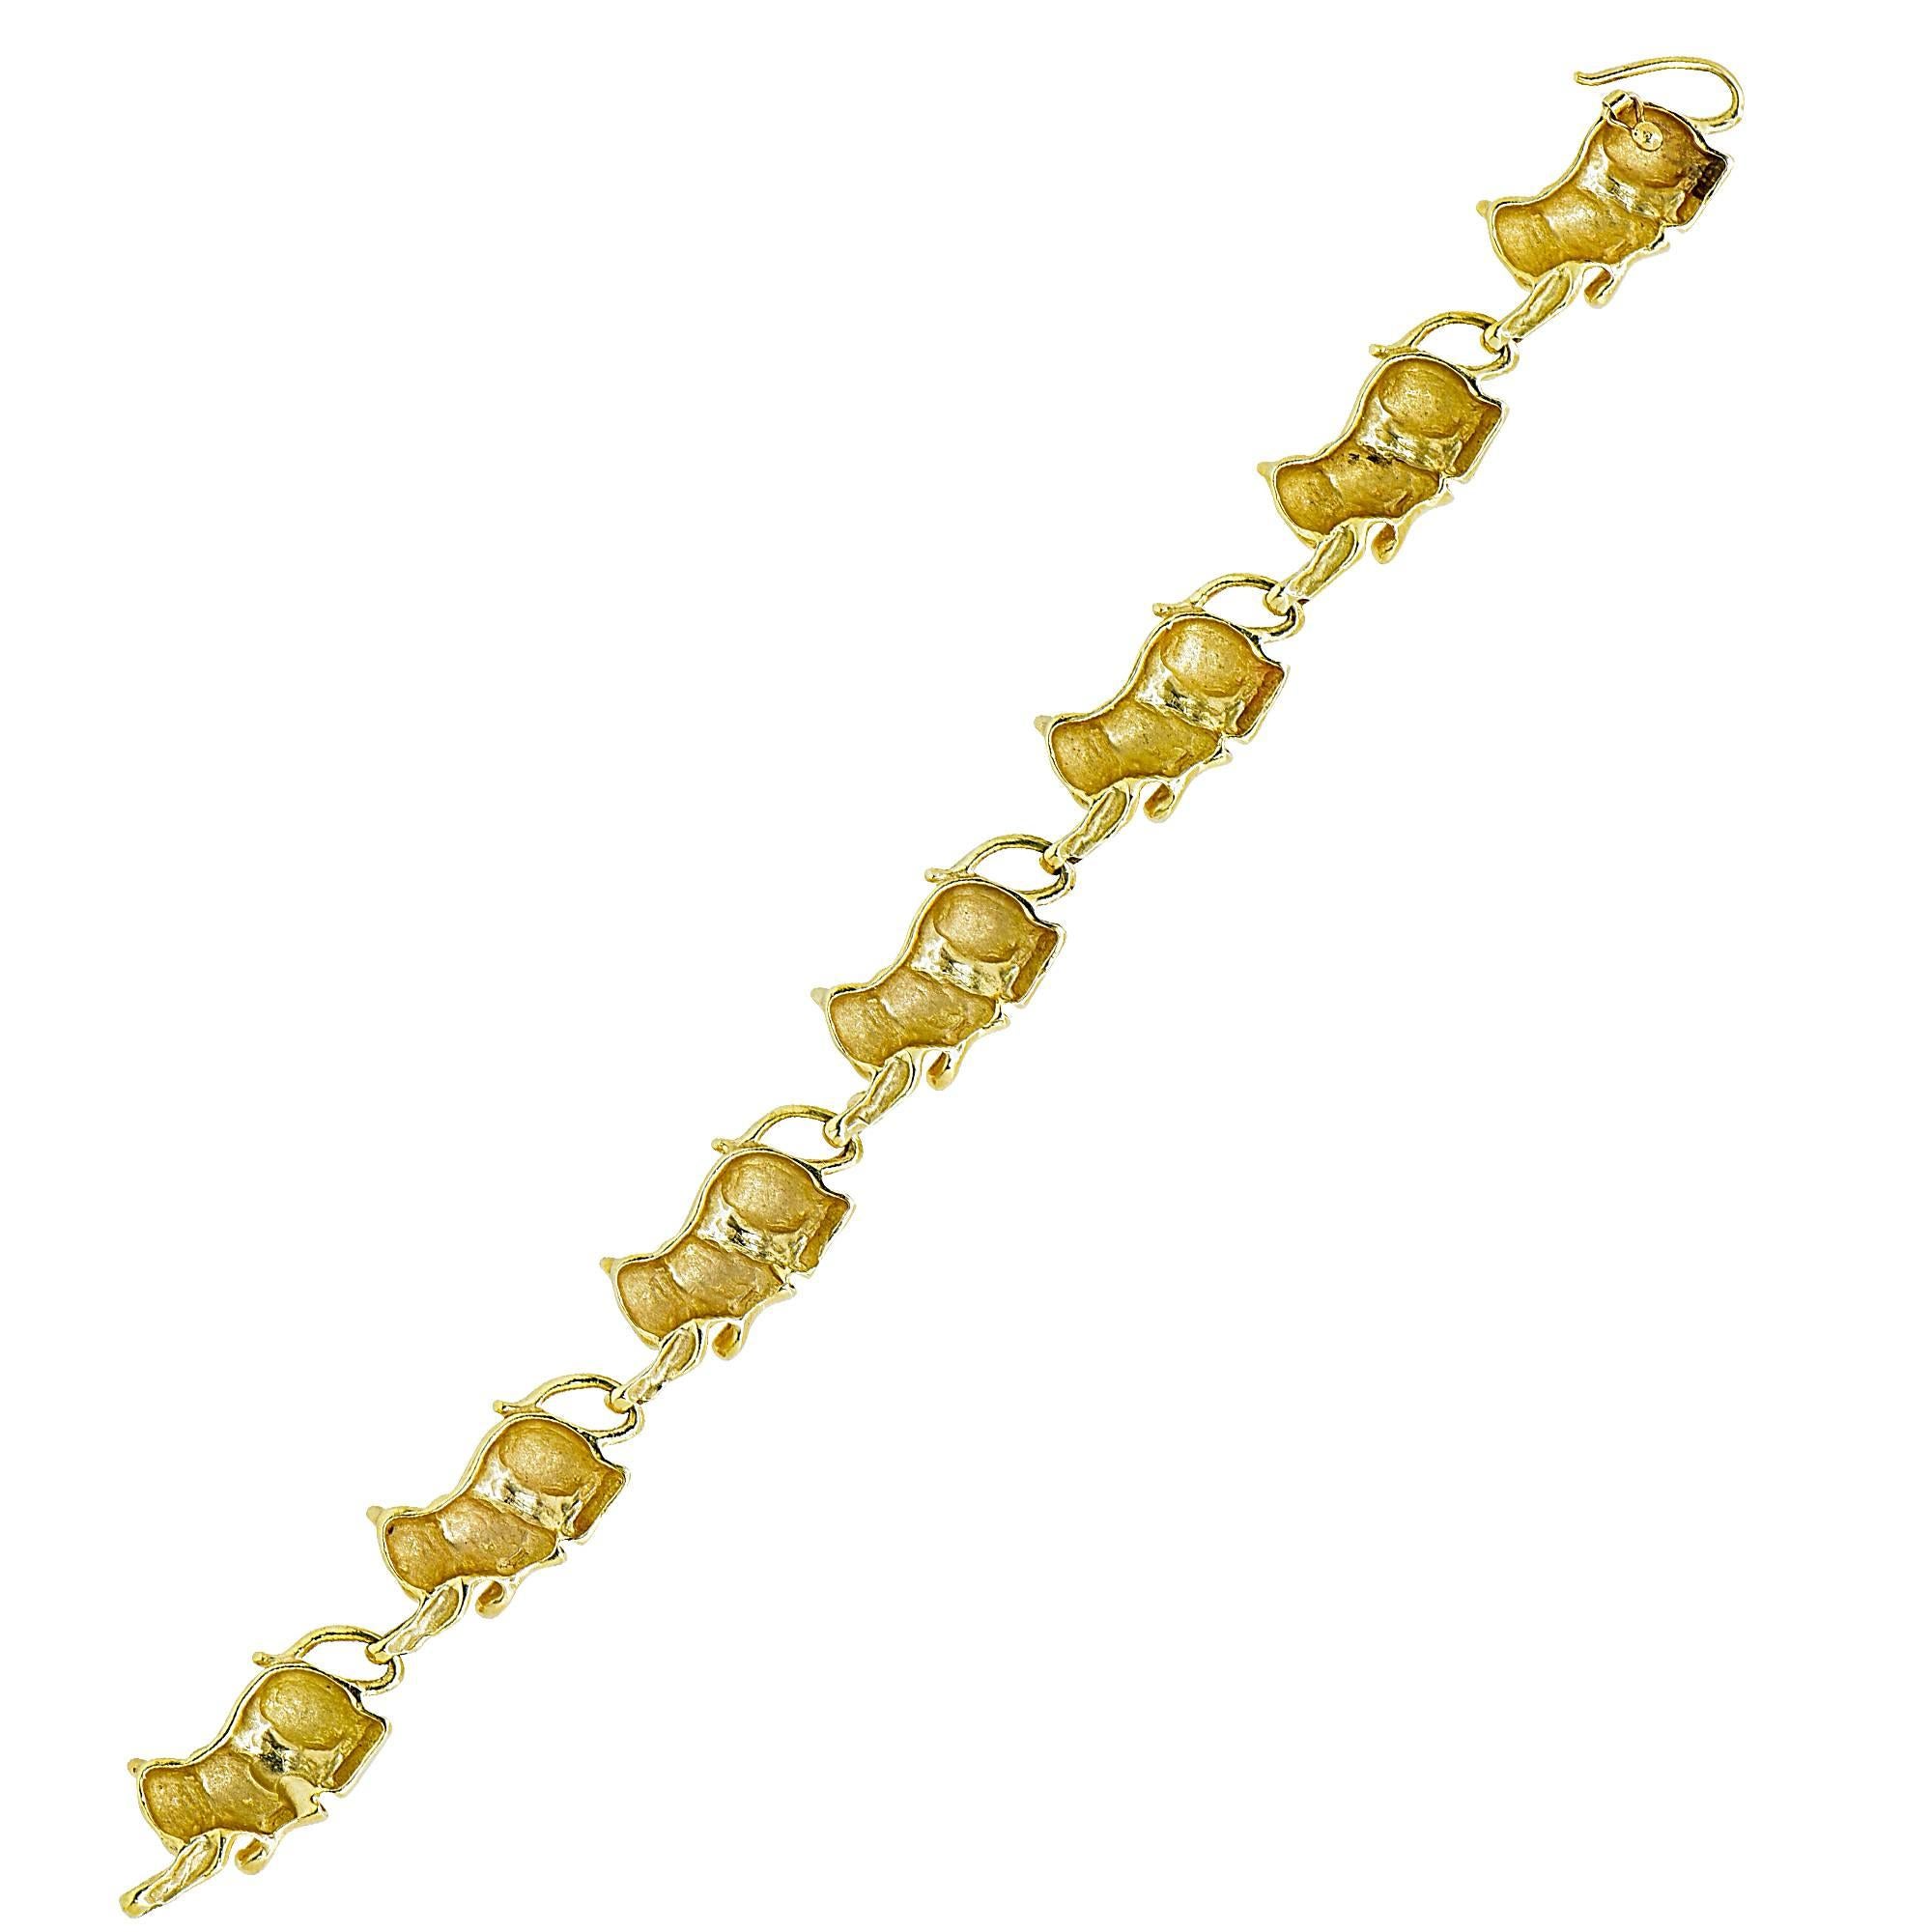 14k gold cat bracelet